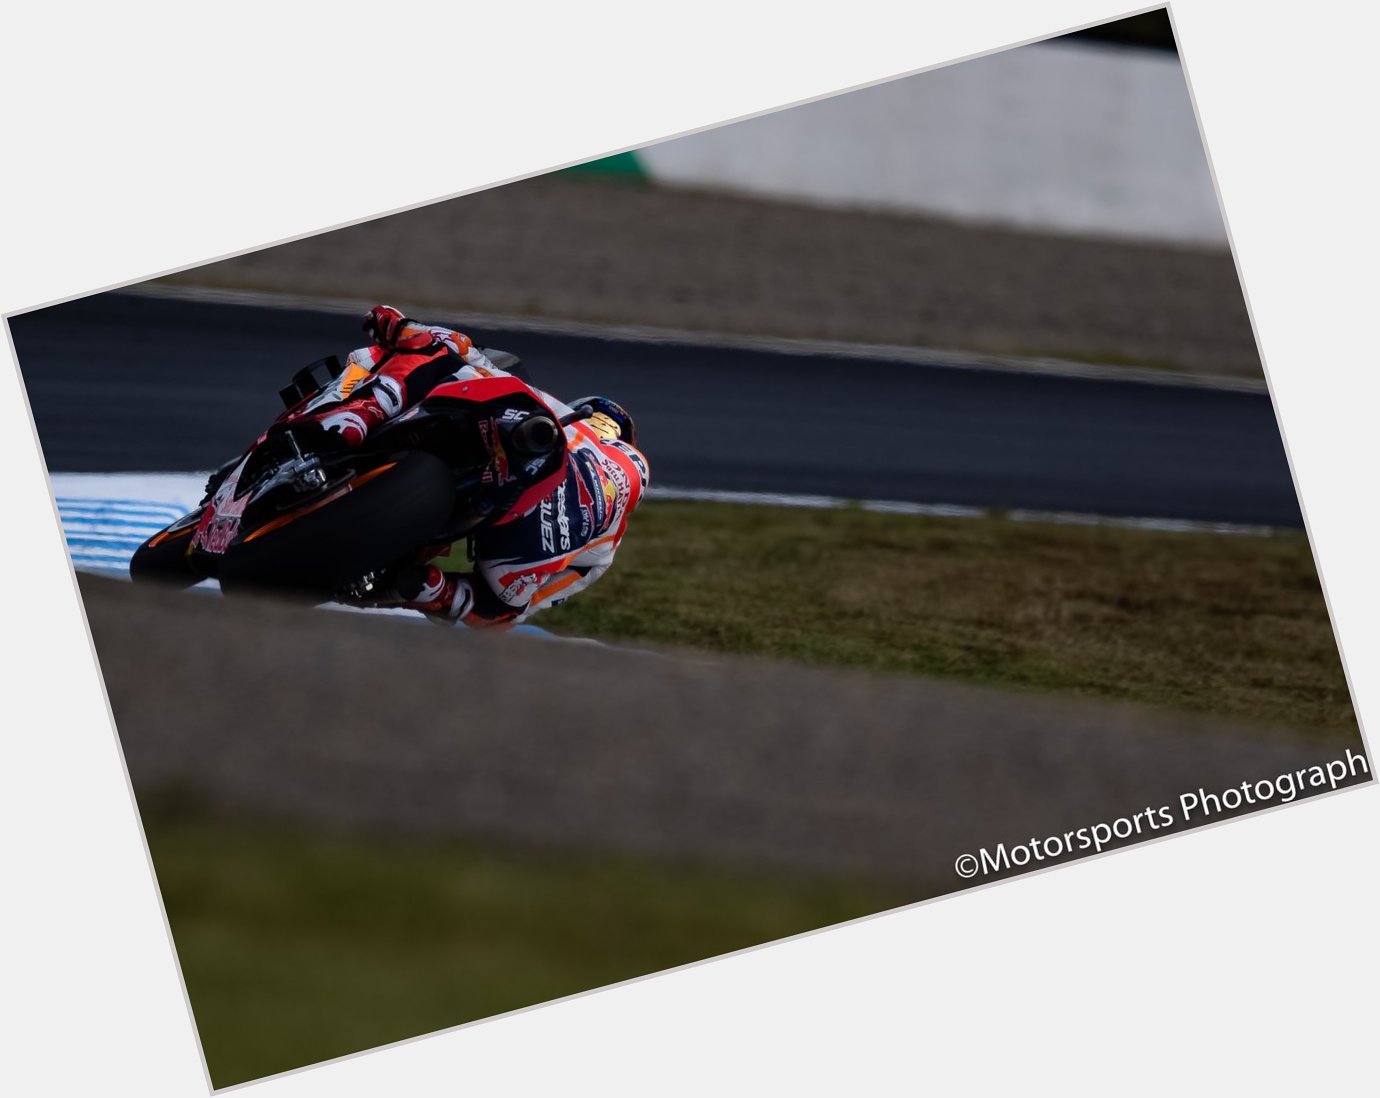 HAPPY BIRTHDAY!!

2019 MOTUL GRAND PRIX OF JAPAN
MotoGP Repsol Honda Team
Marc MARQUEZ 